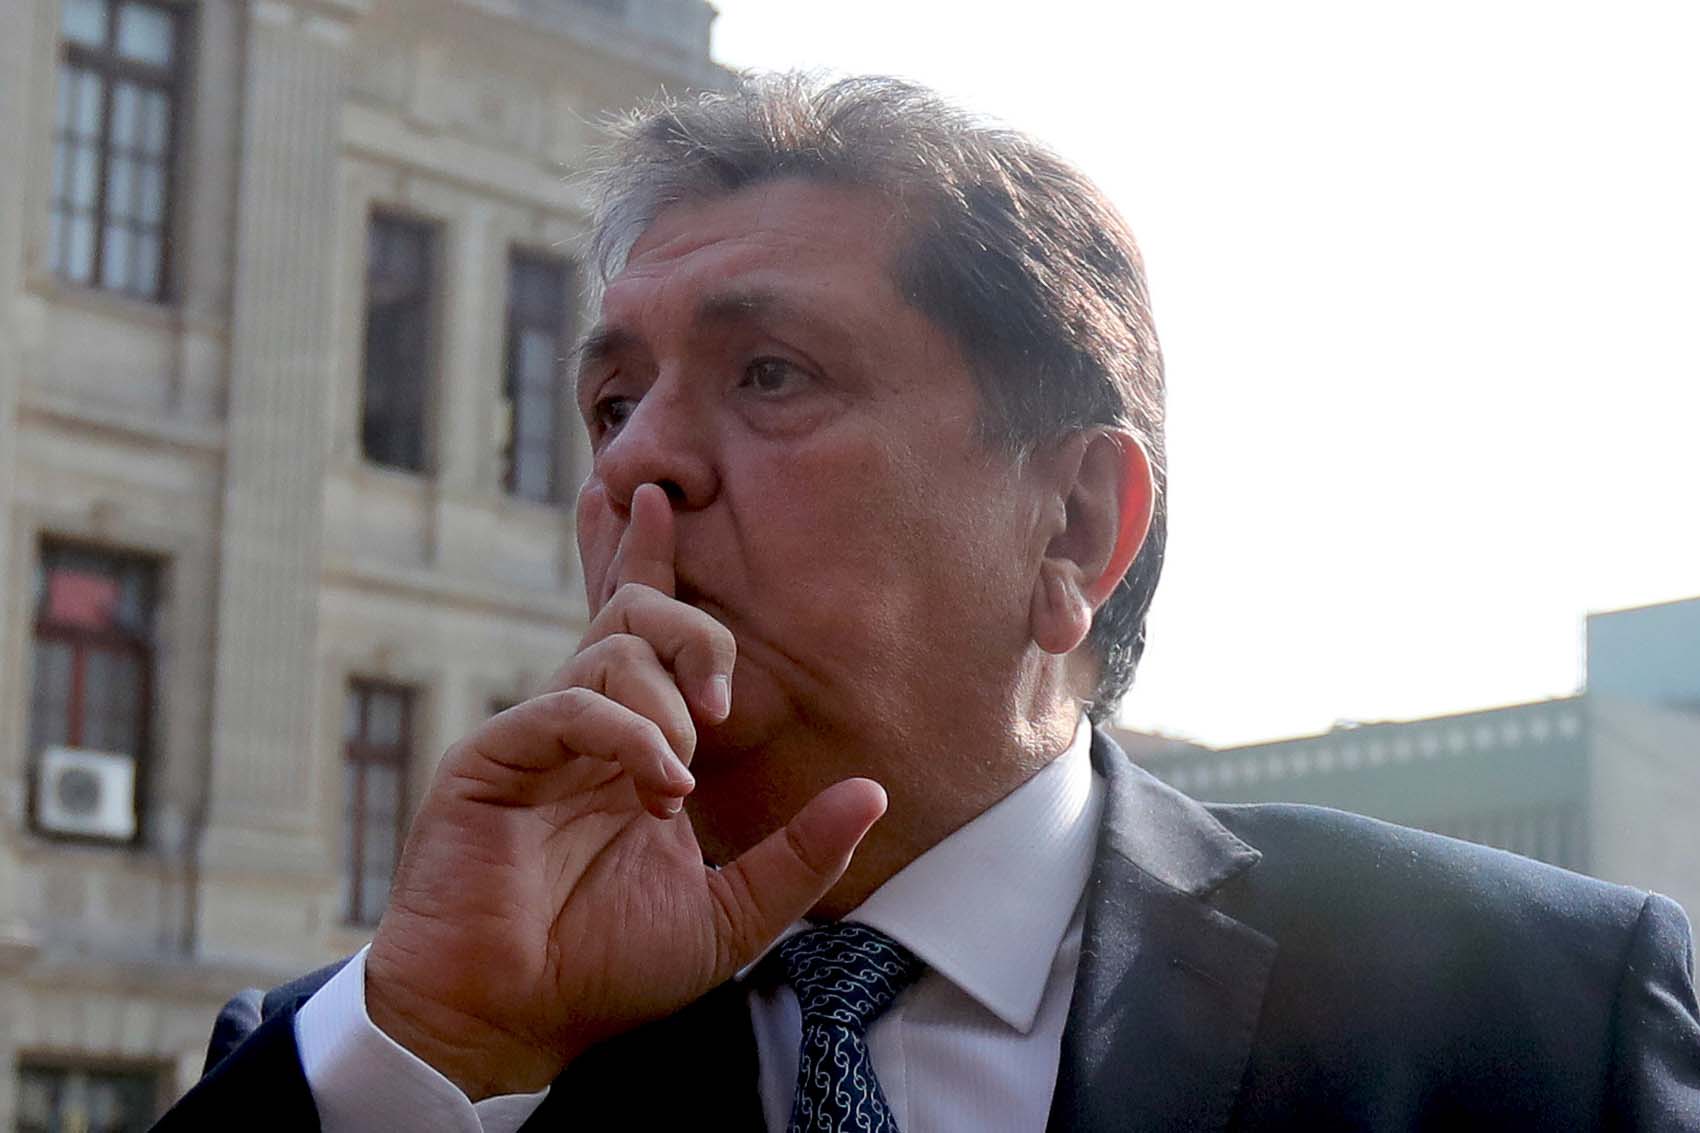 Expresidente Alan García no asistió a declarar sobre supuestas escuchas ilegales